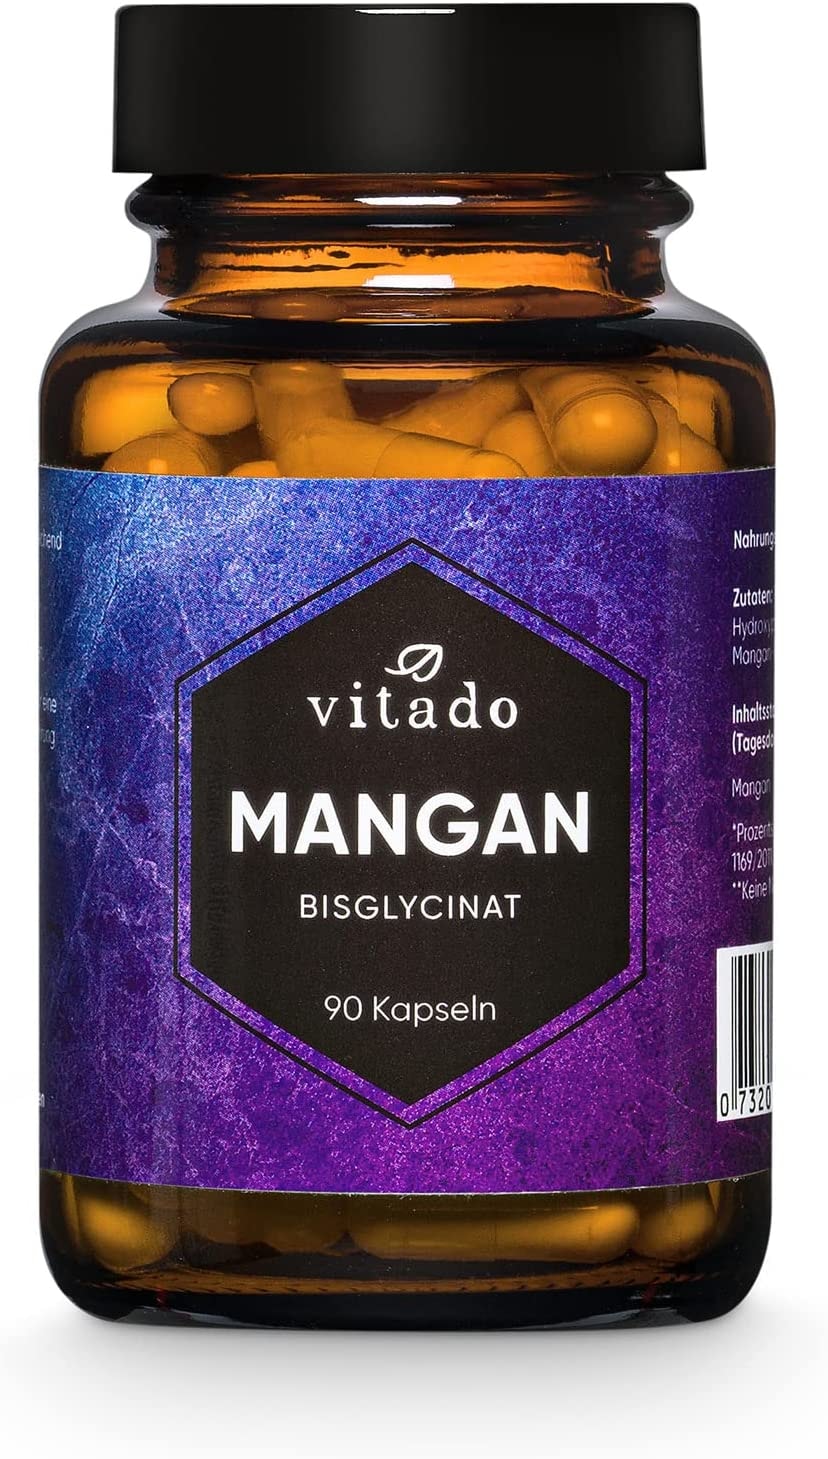 vitado - Mangan Kapseln hochdosiert - 5 mg als Mangan Bisglycinat - Laborgeprüft - 90 Kapseln im Glas - Vegan